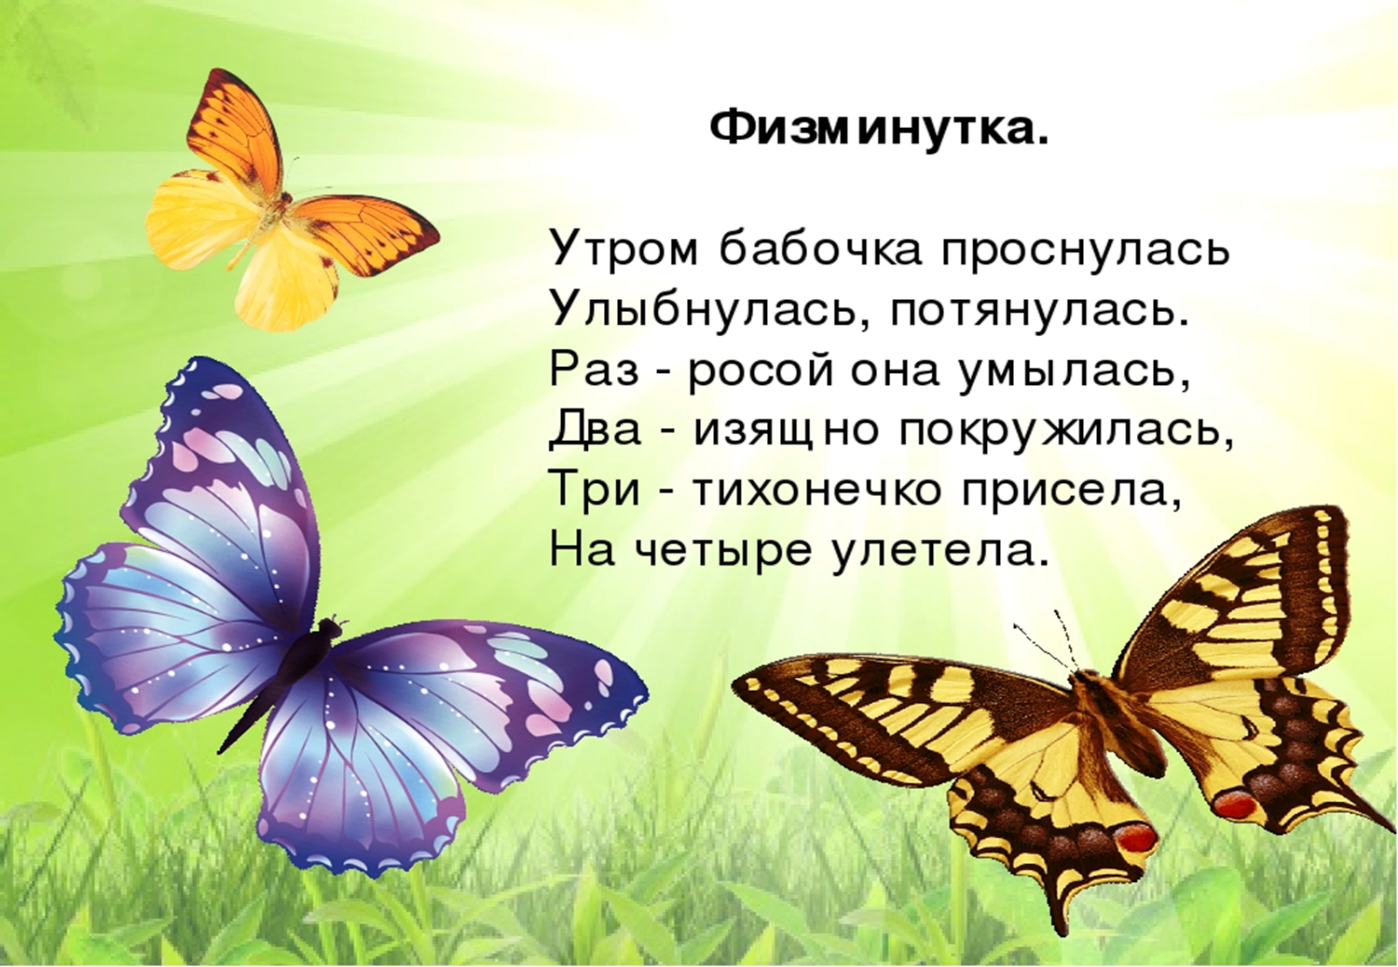 Стих про бабочку. Стихотворение про бабочку для детей. Стишки про бабочку для малышей. Стихи для детей про бабочек для детей.